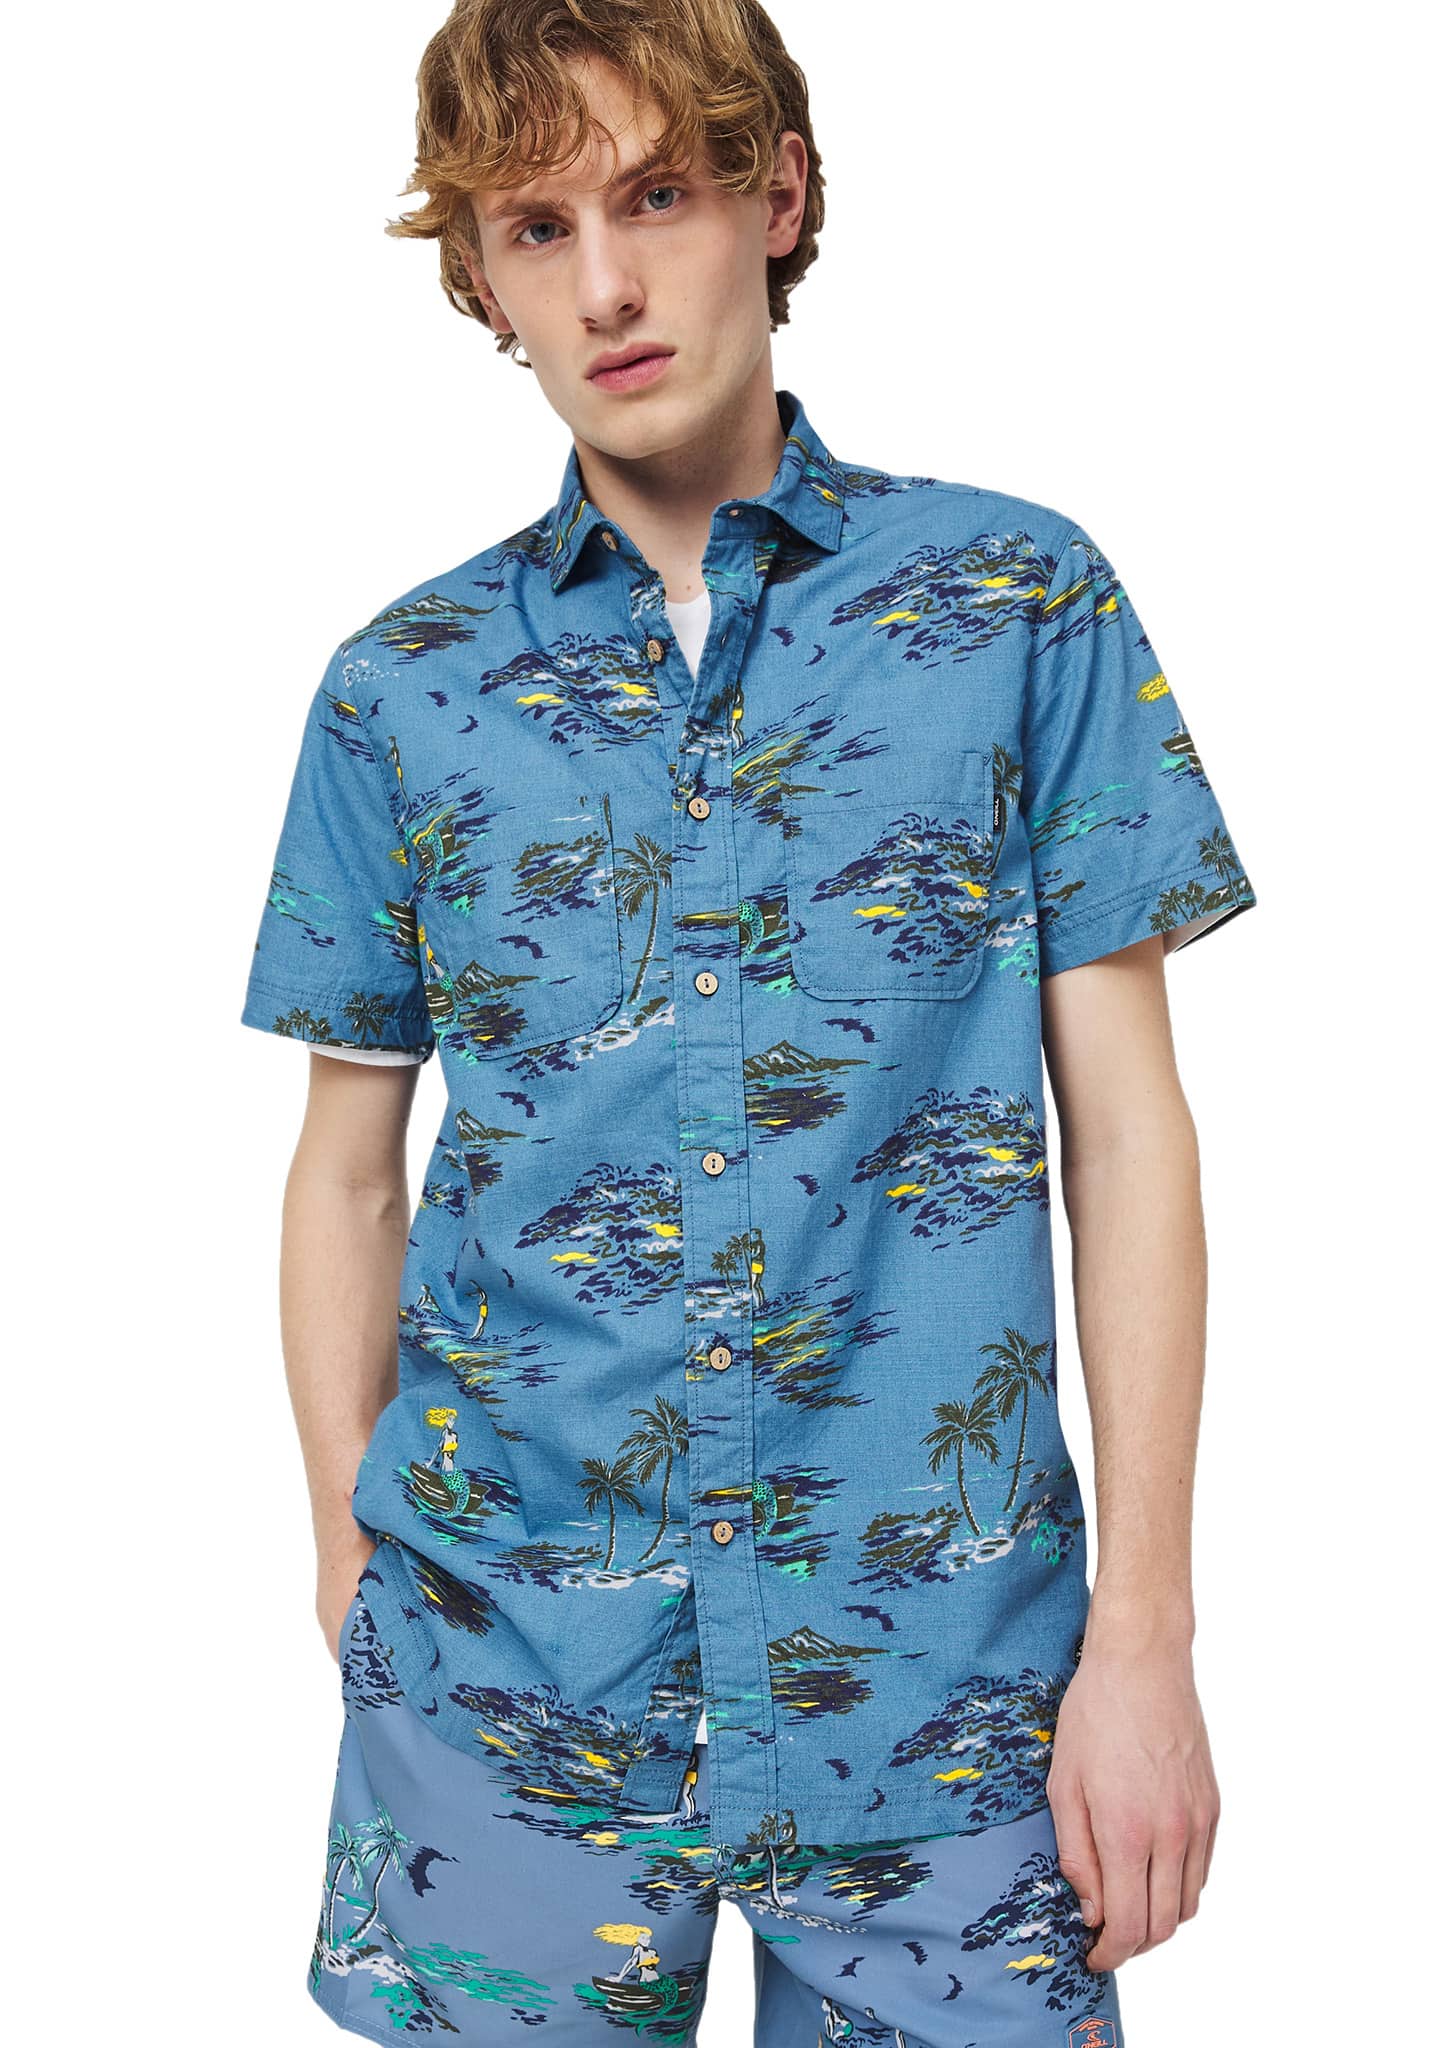 O'Neill Tropical S/S Hemd blau XXL